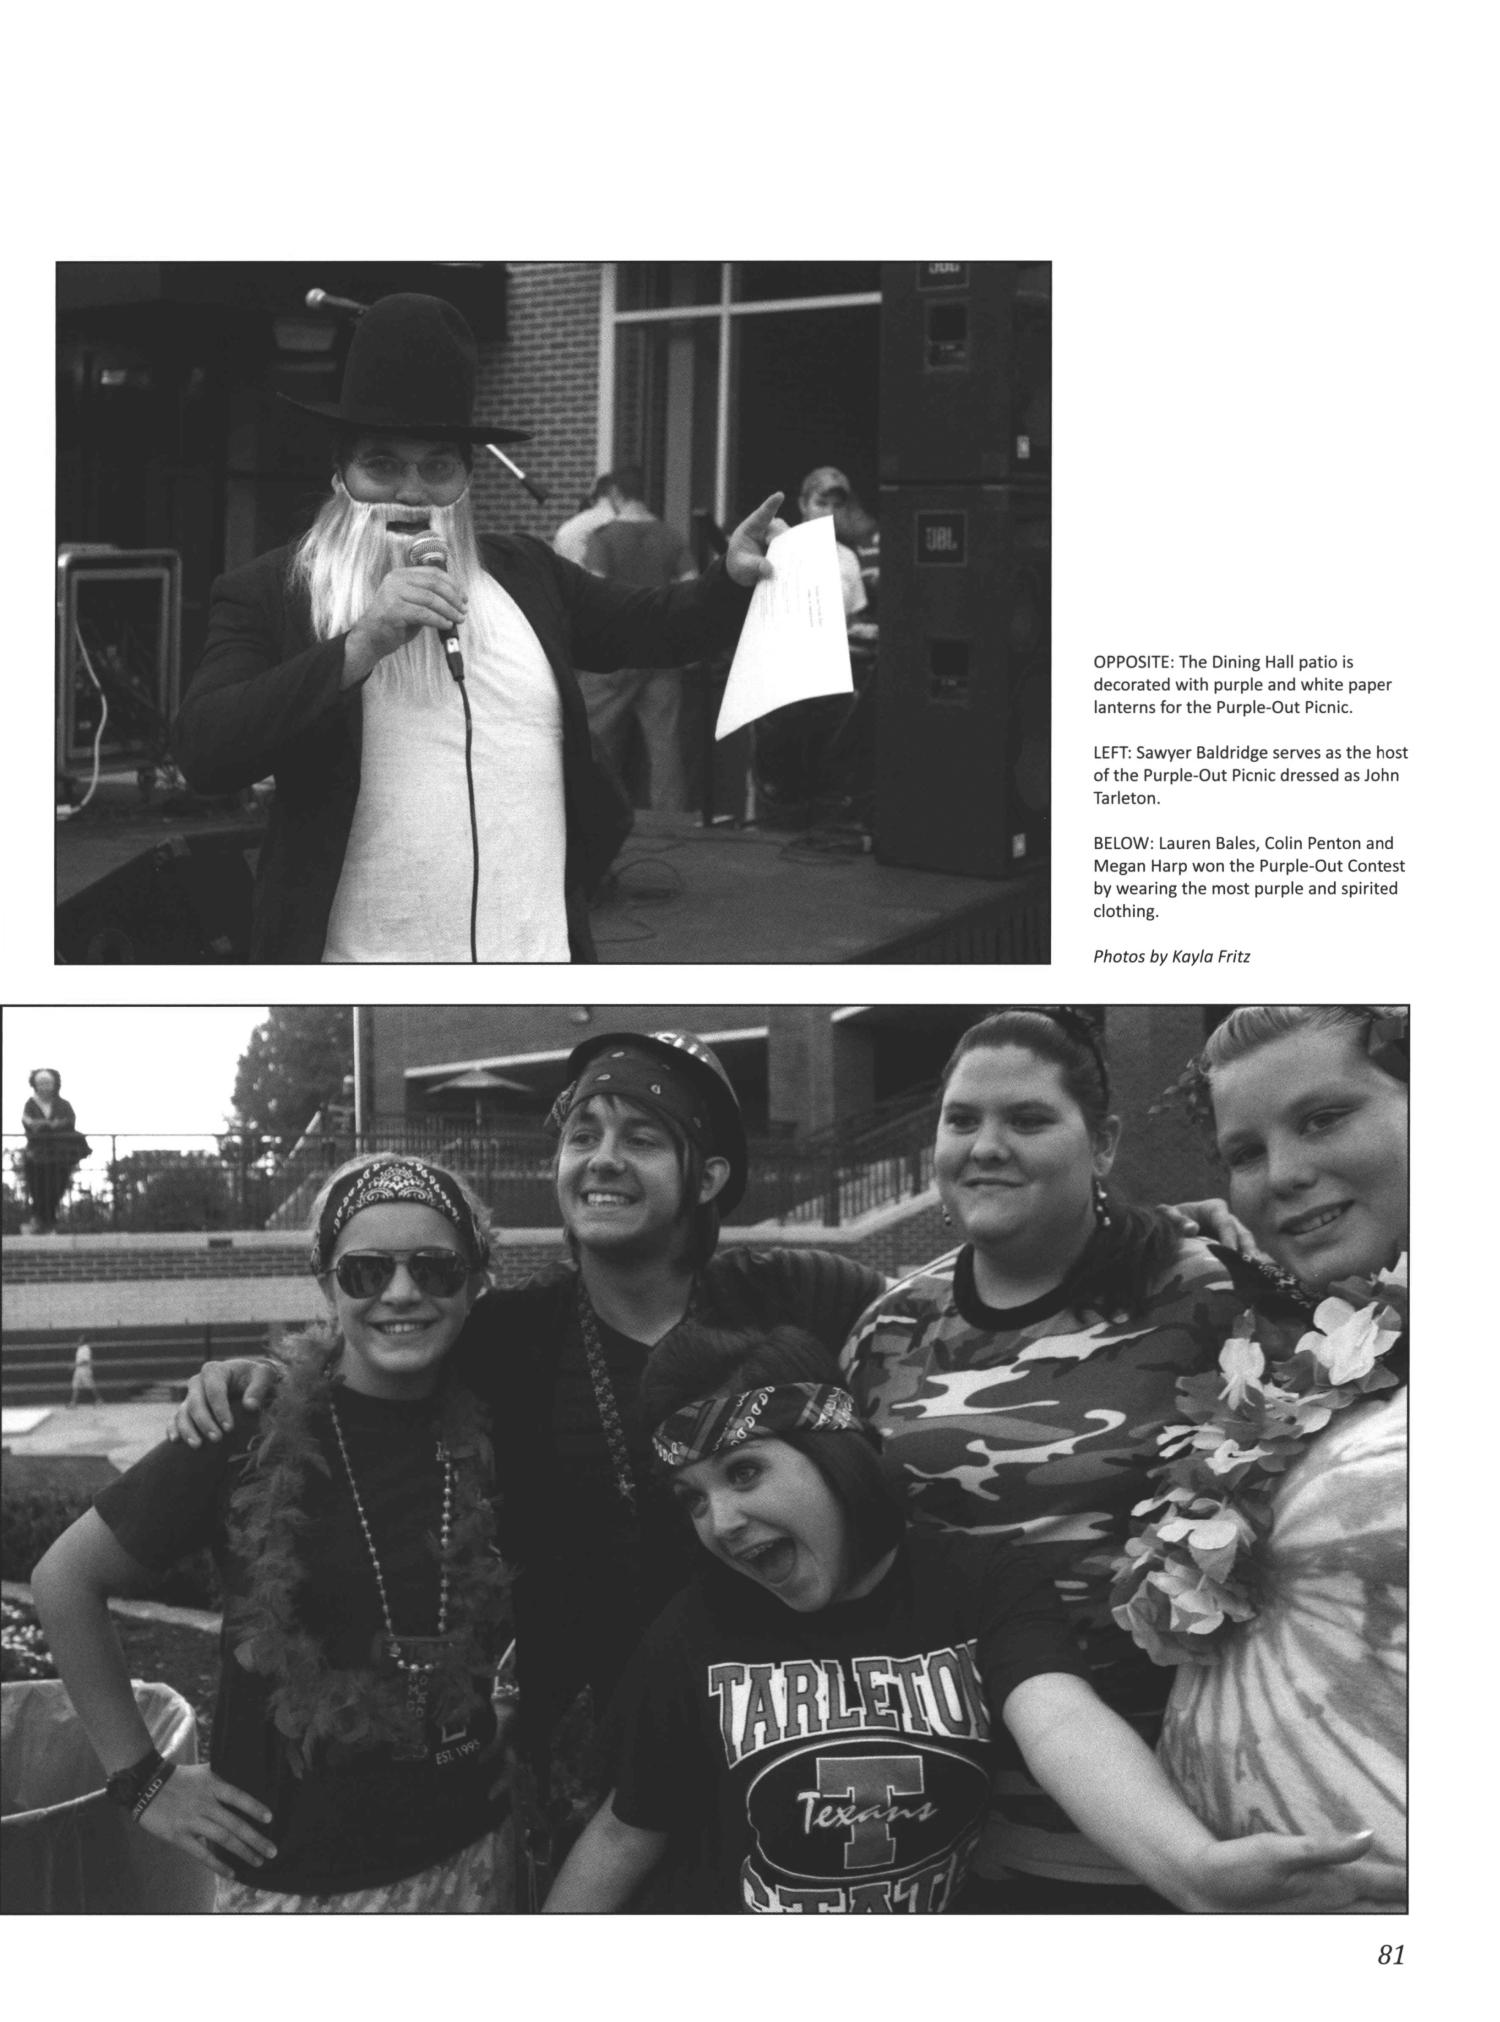 The Grassburr, Yearbook of Tarleton State University, 2011
                                                
                                                    81
                                                